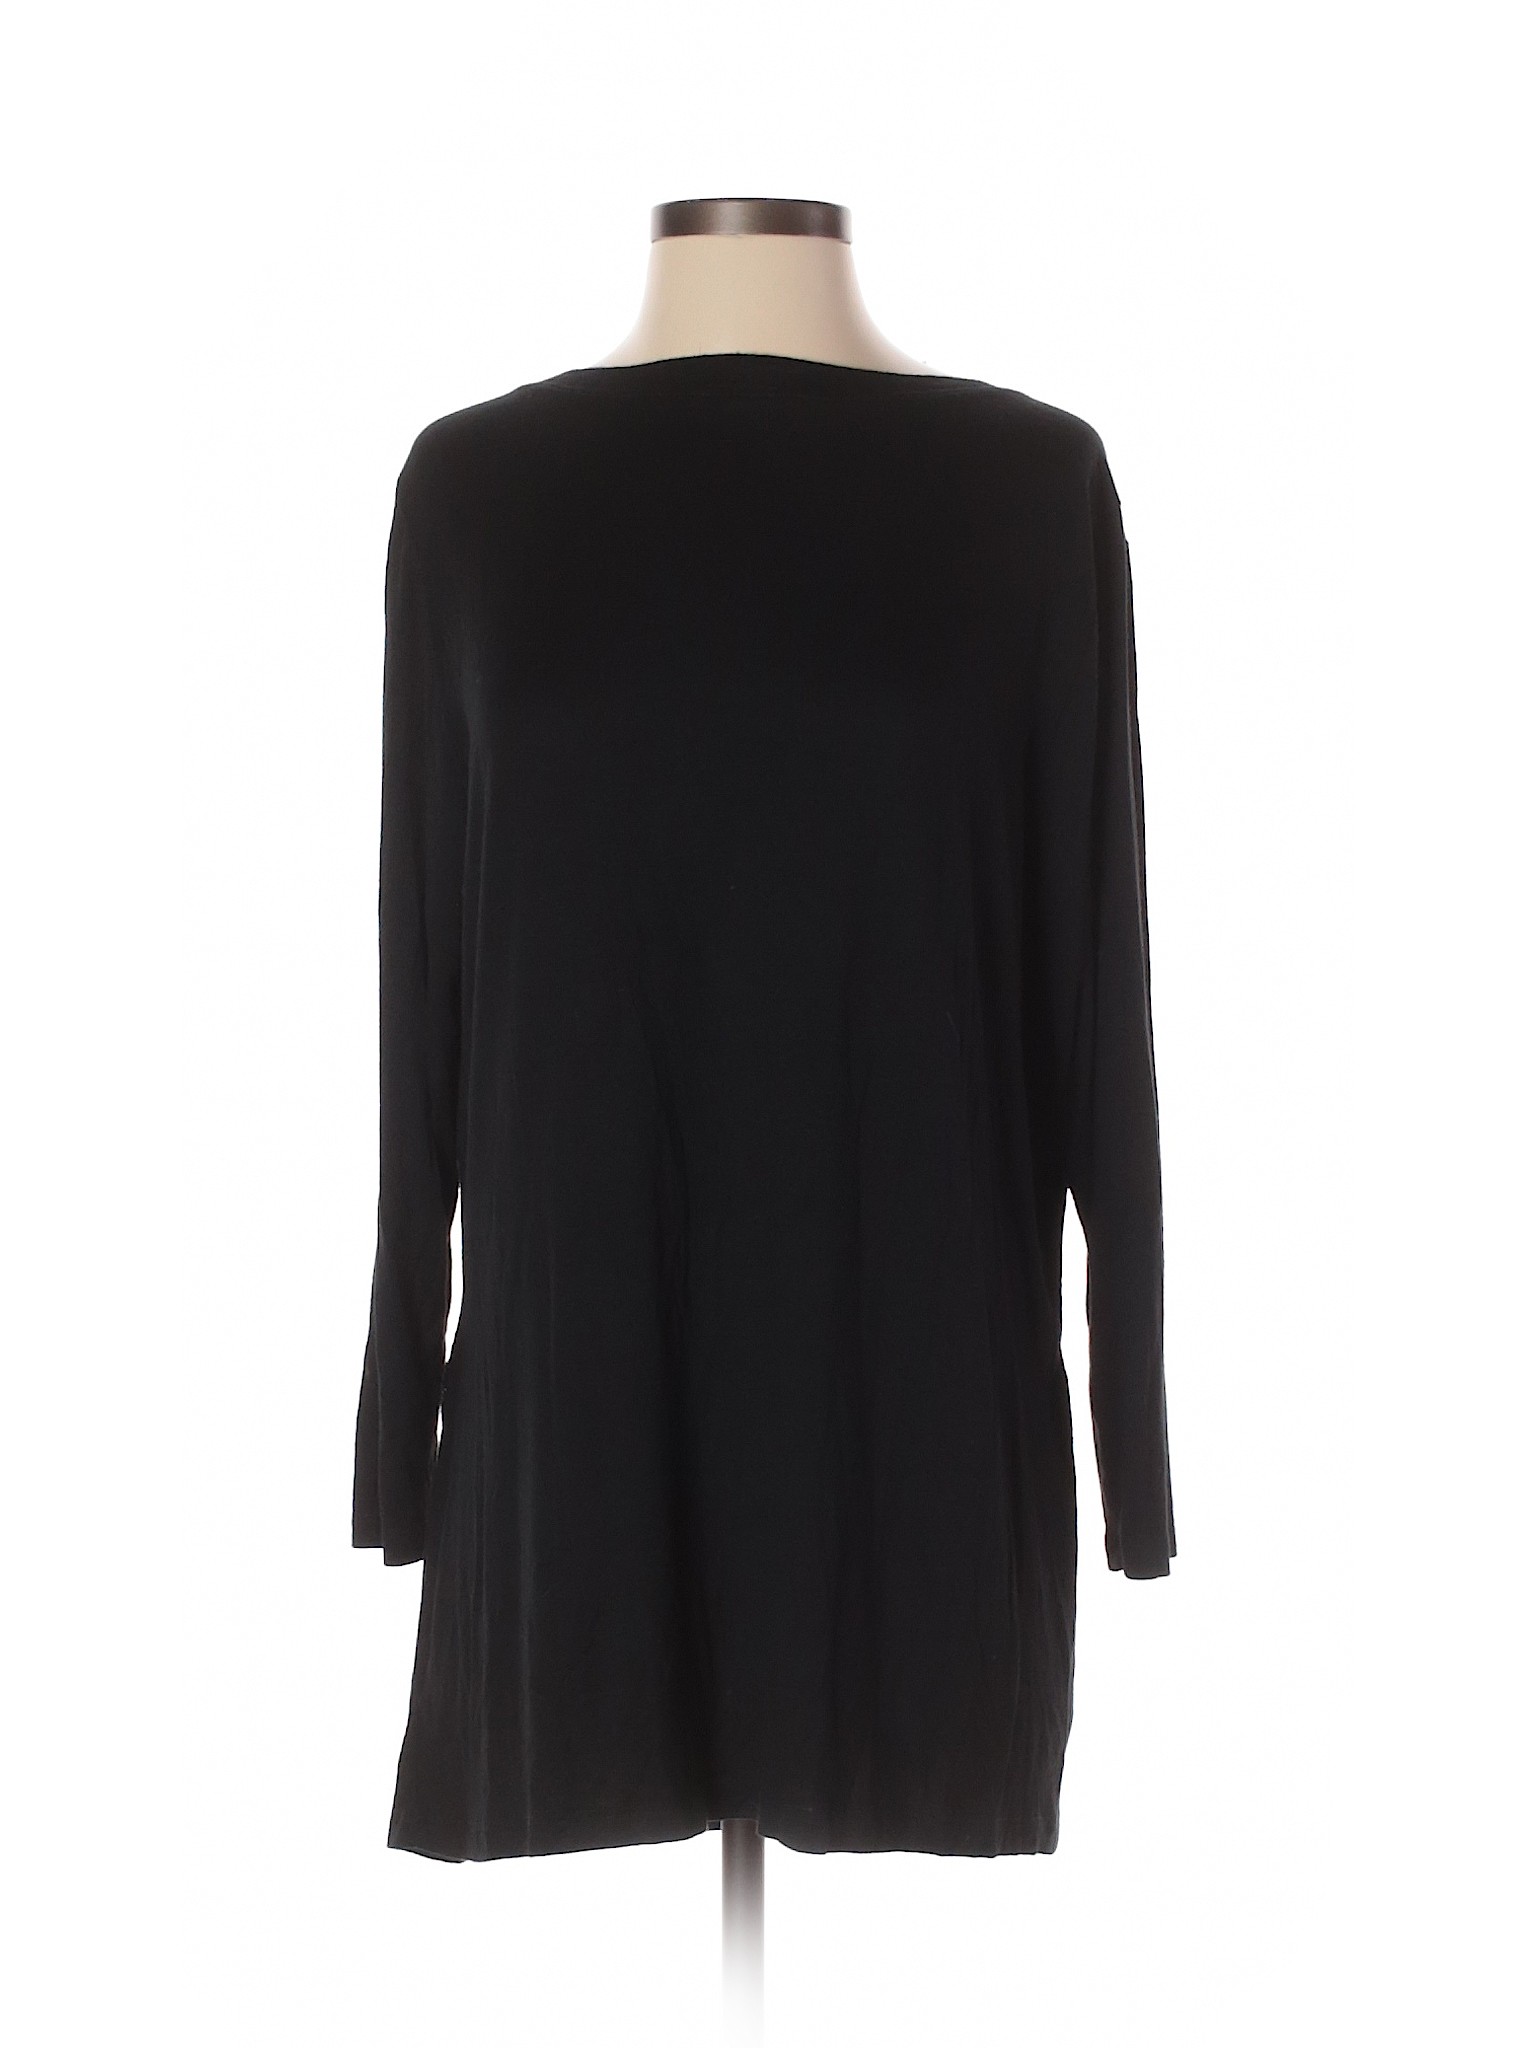 Nally & Millie Women Black Casual Dress S | eBay